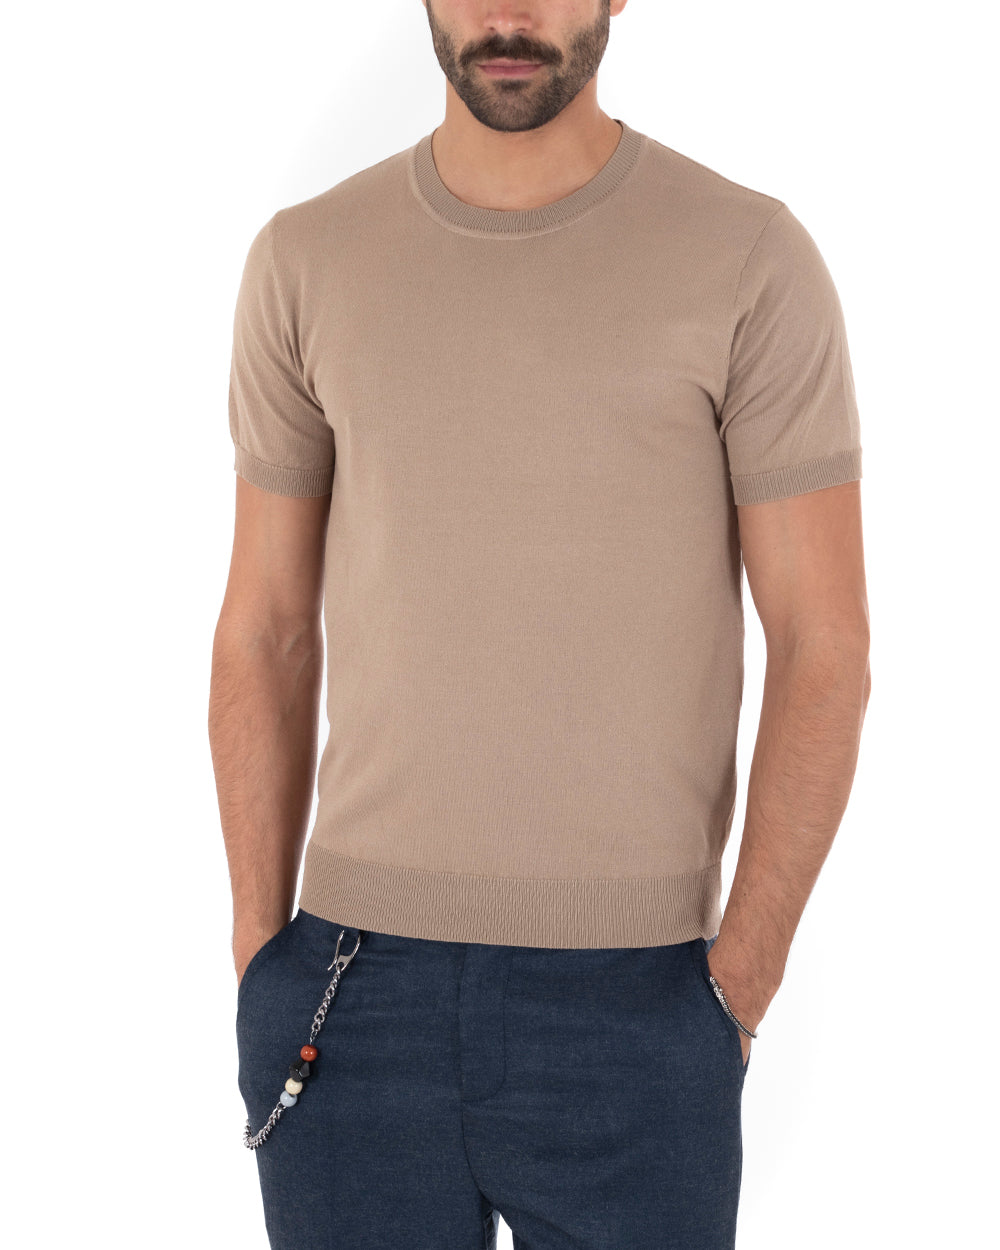 T-Shirt Uomo Maniche Corte Tinta Unita Camel Girocollo Filo Casual GIOSAL-TS3053A